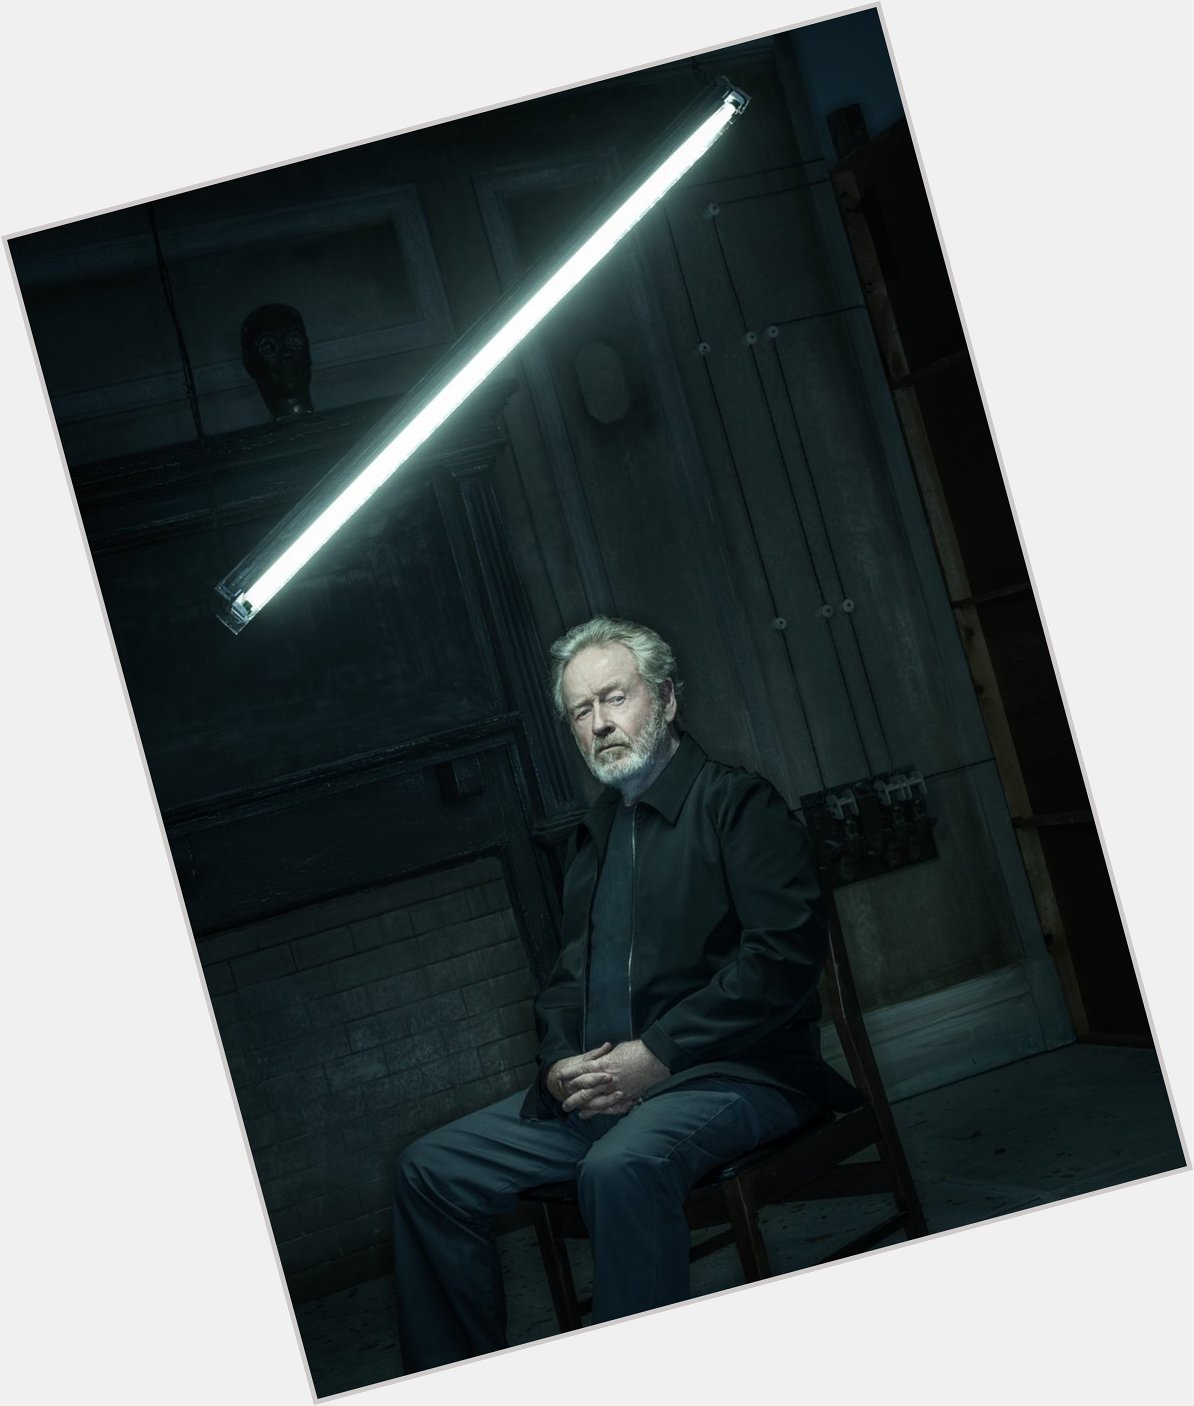 Happy birthday to Ridley Scott, the man behind so much movie magic.    